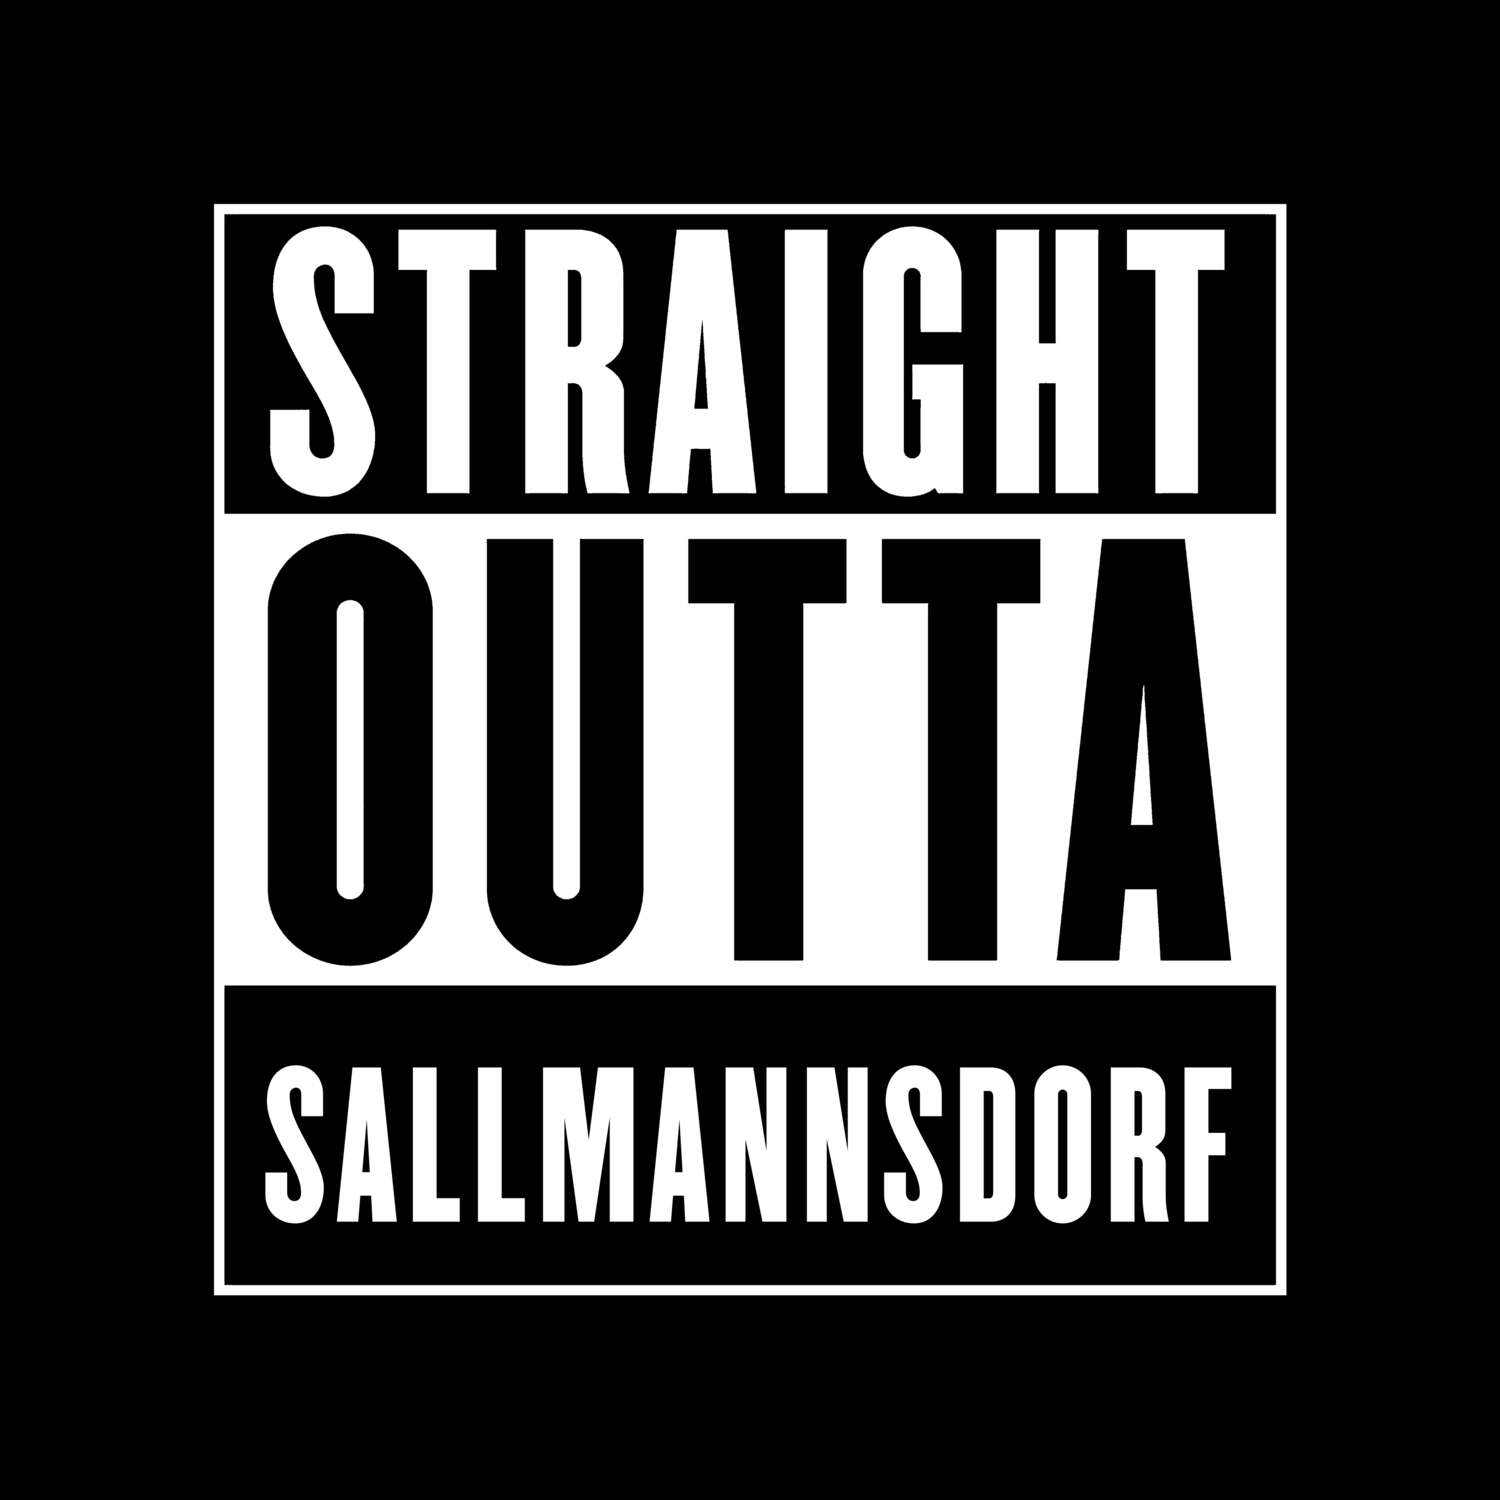 Sallmannsdorf T-Shirt »Straight Outta«